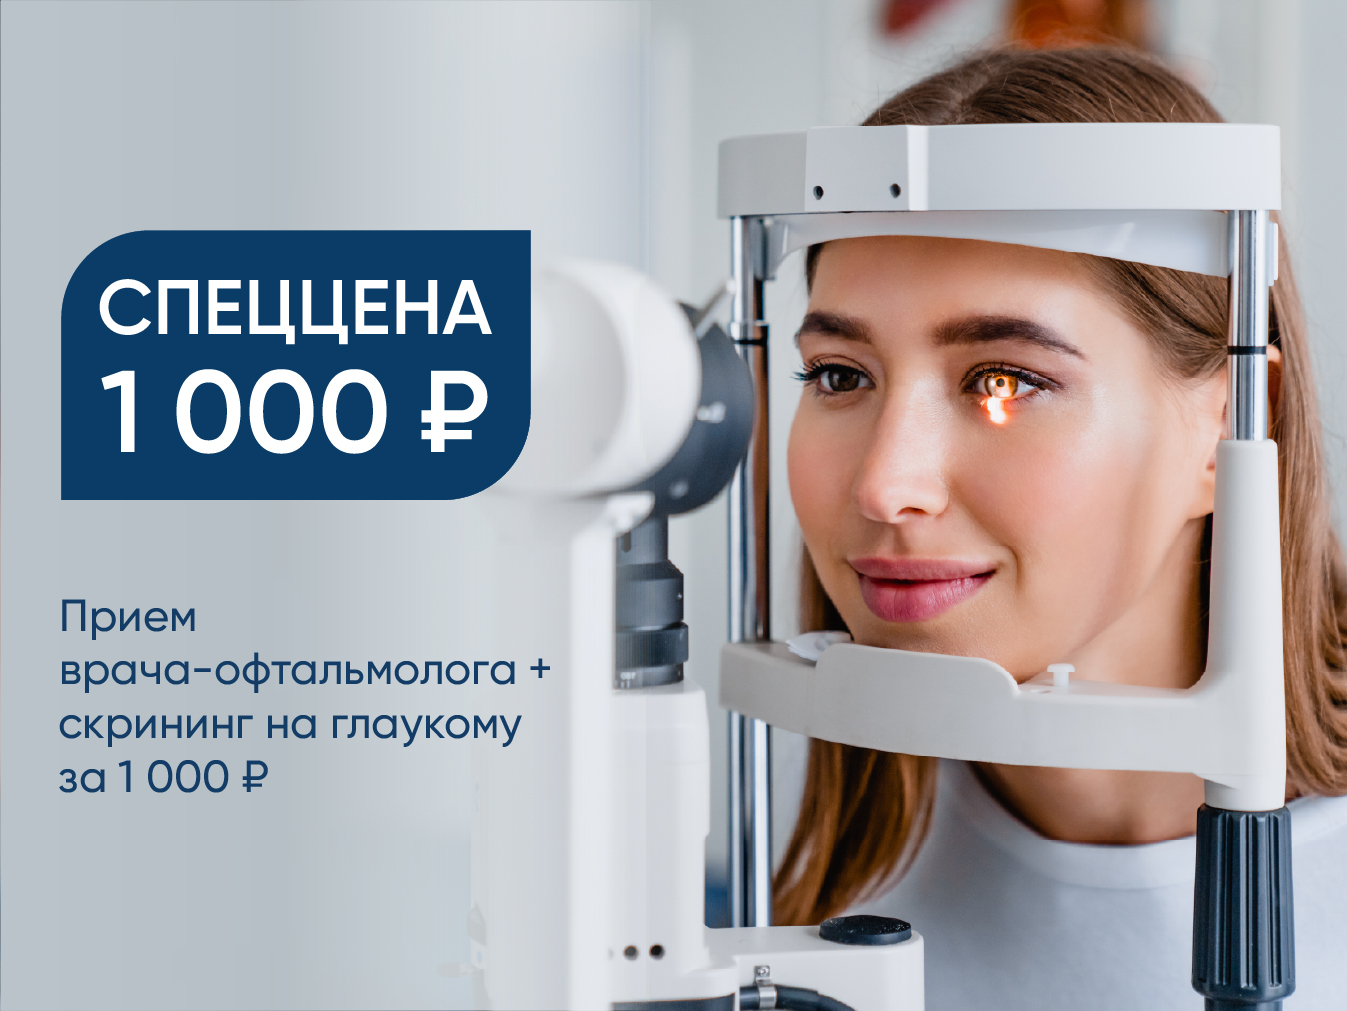 Прием врача-офтальмолога + скрининг на глаукому за 1000 руб.